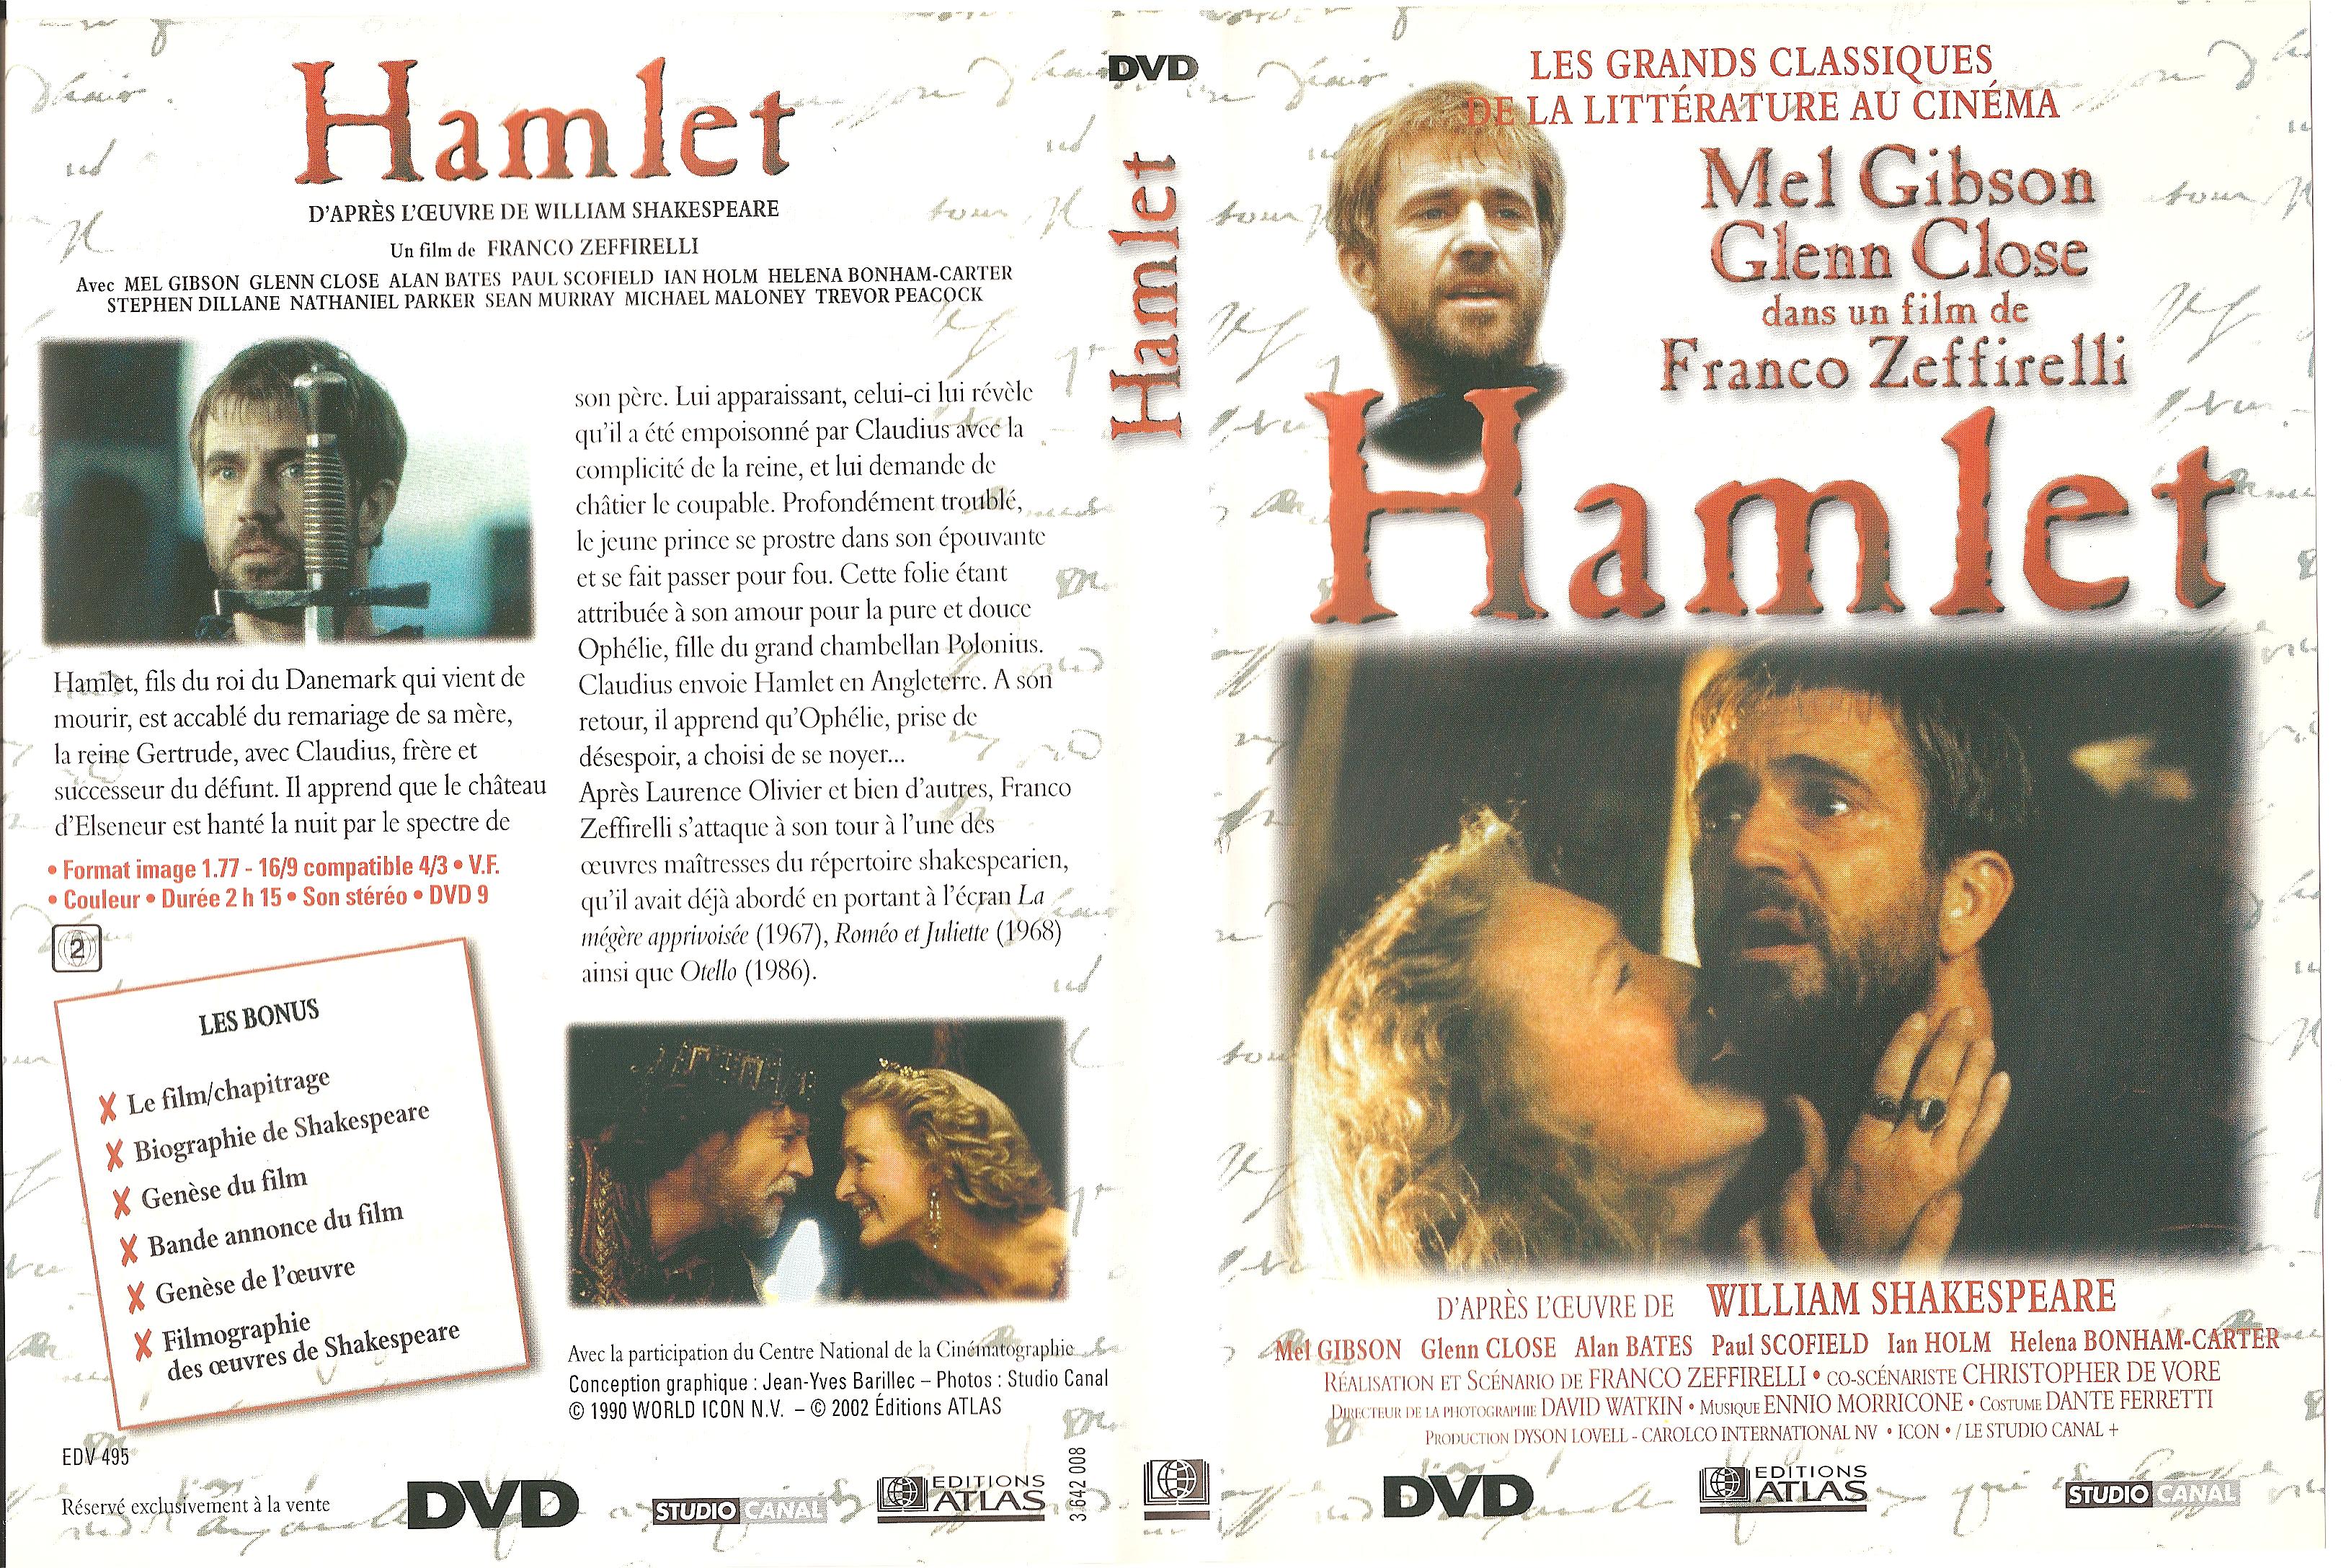 Jaquette Dvd De Hamlet Mel Gibson Cin Ma Passion